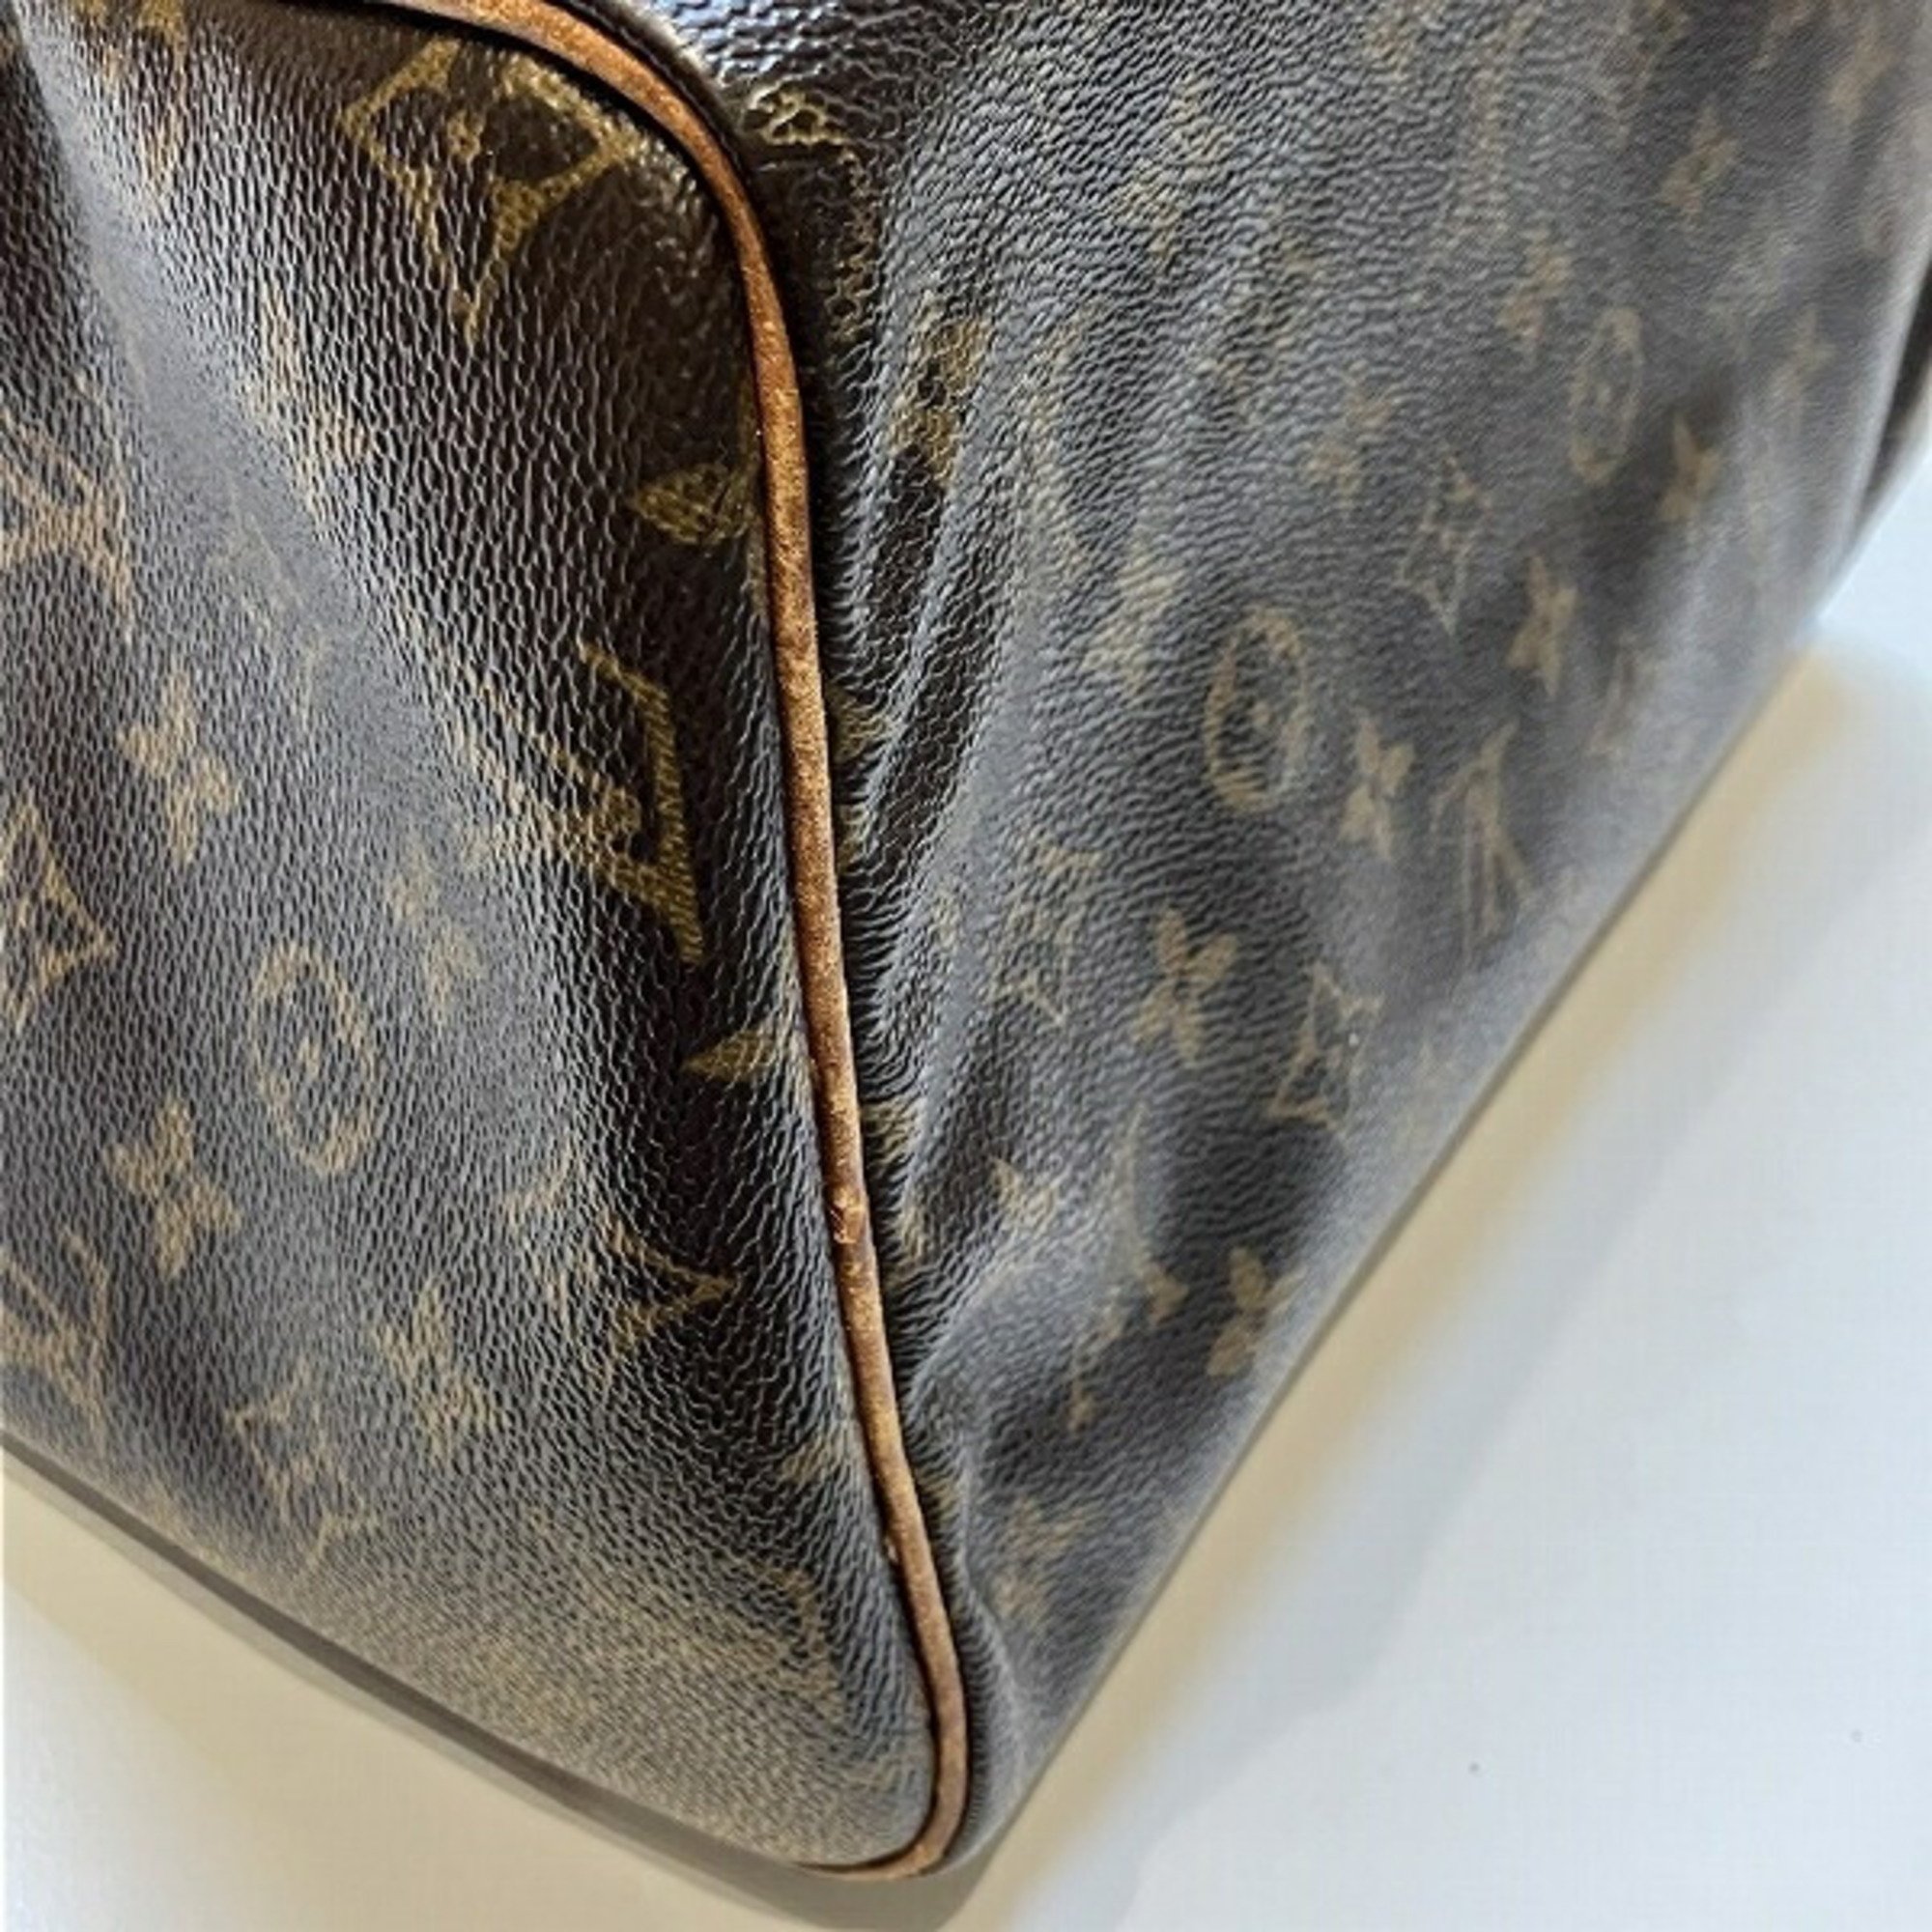 Louis Vuitton Monogram Speedy 30 M41526 Bags, Handbags, Boston Men's and Women's